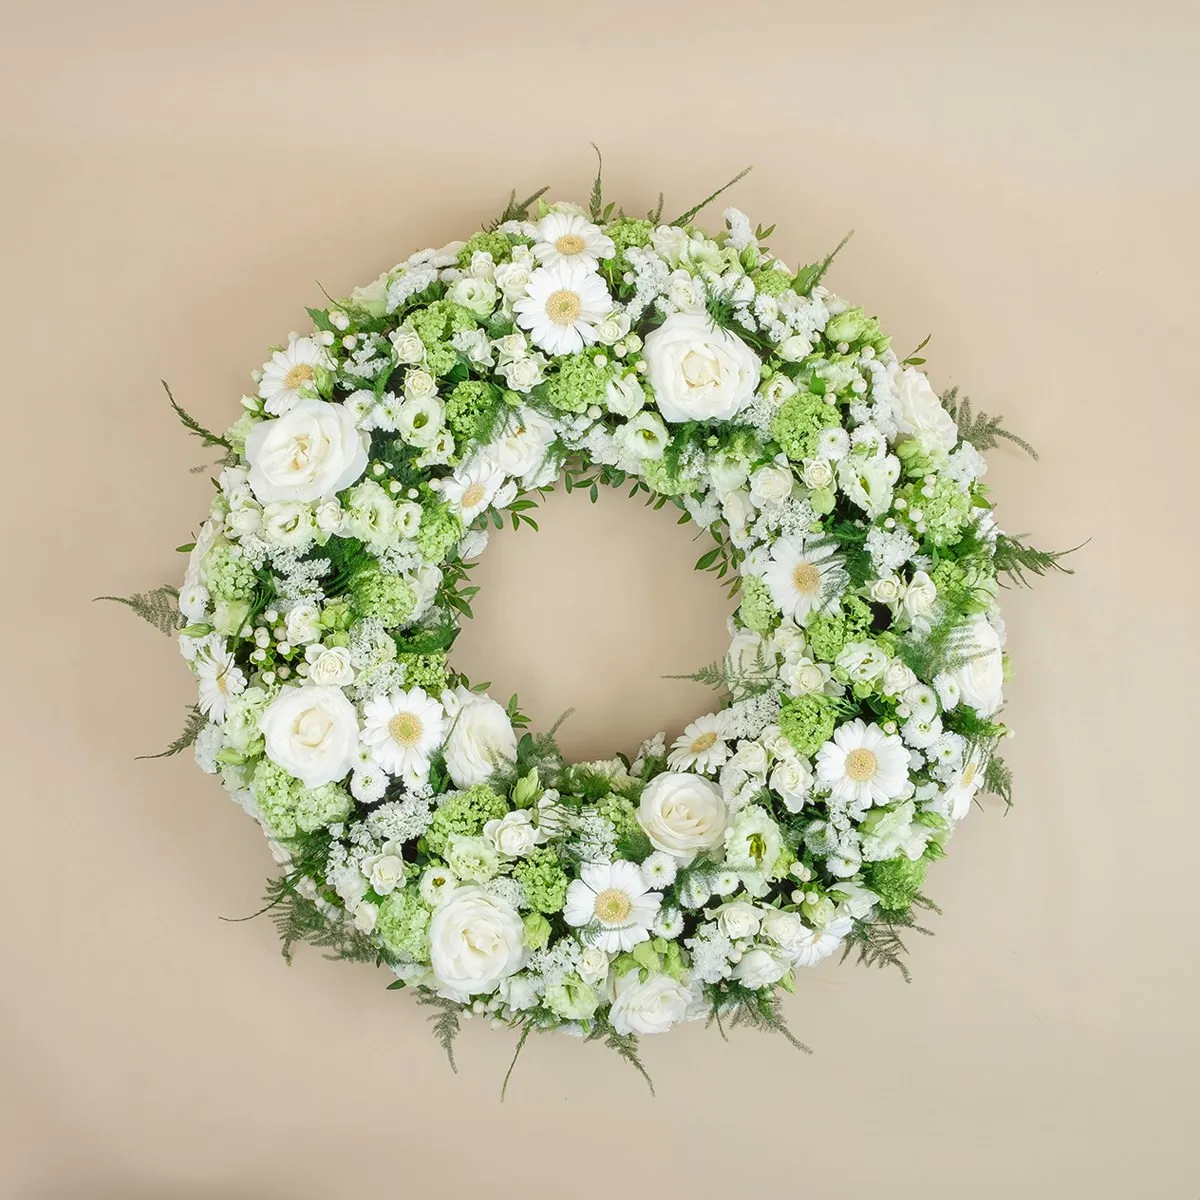 Funeral wreath in white tones - Spain